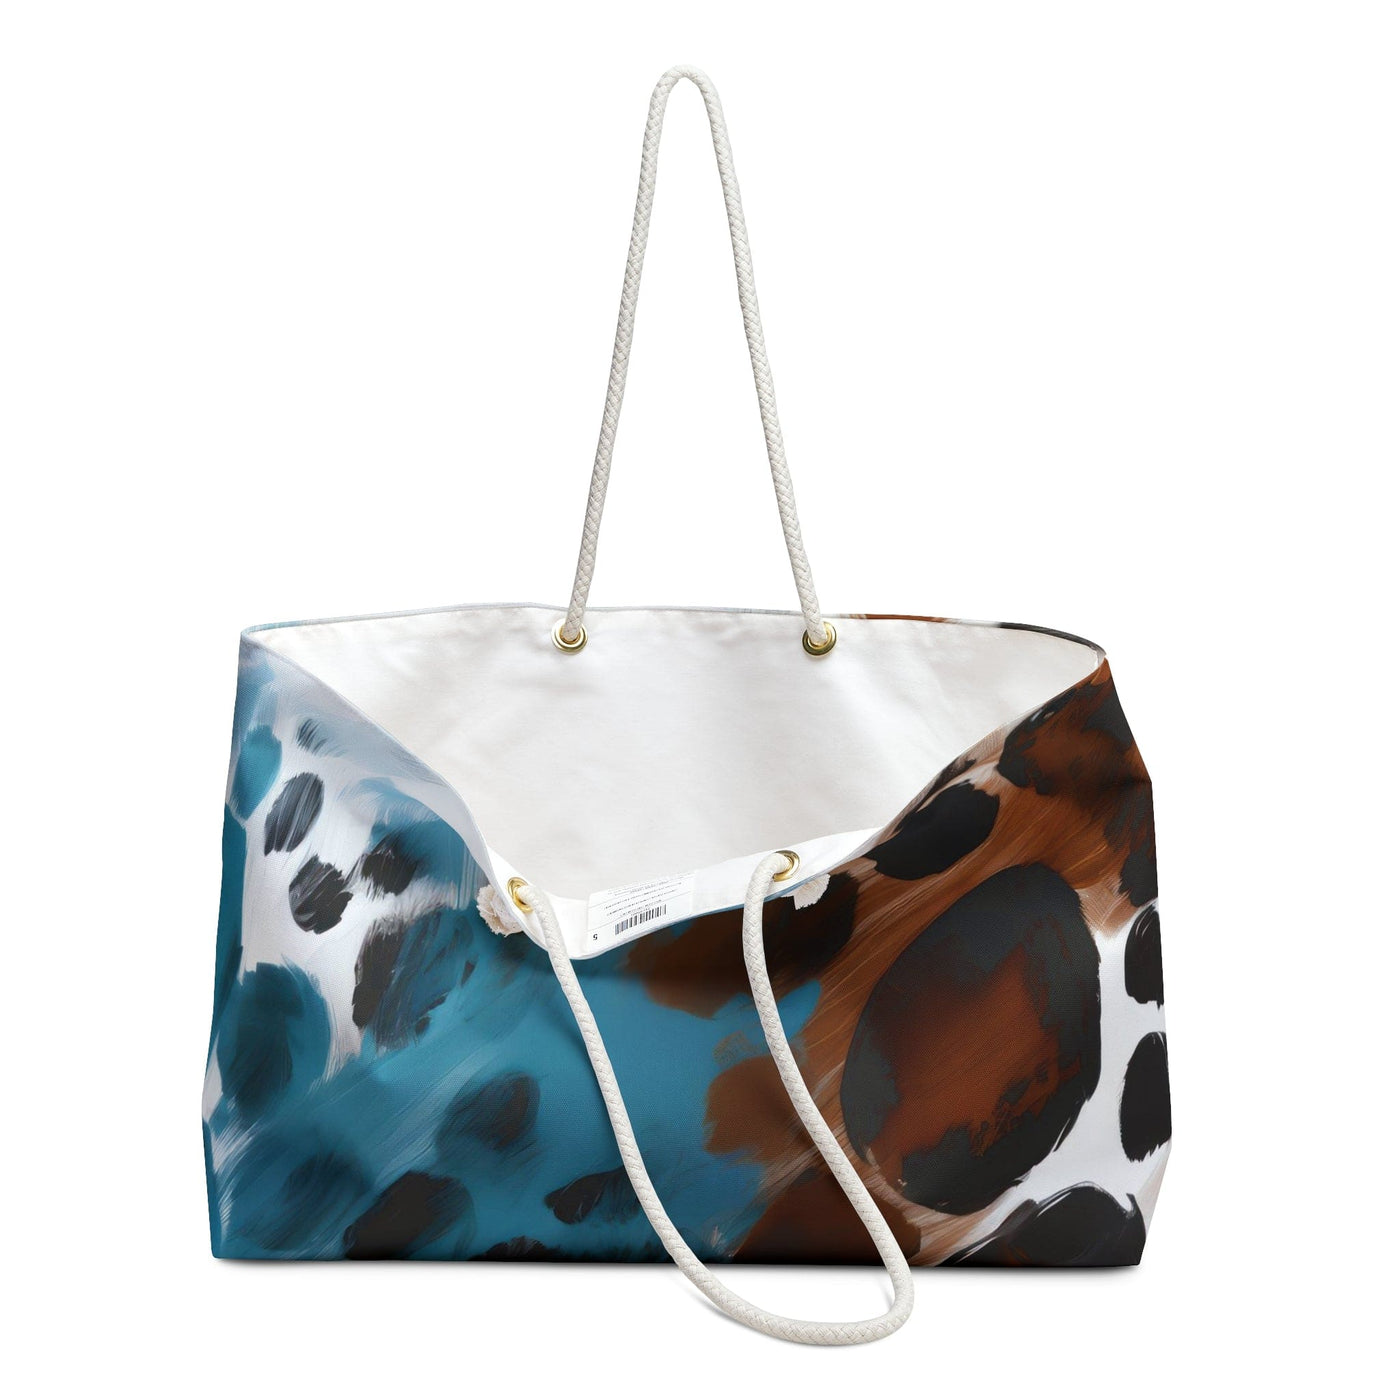 Weekender Tote Bag Rustic Blue And Brown Spotted Pattern - Bags